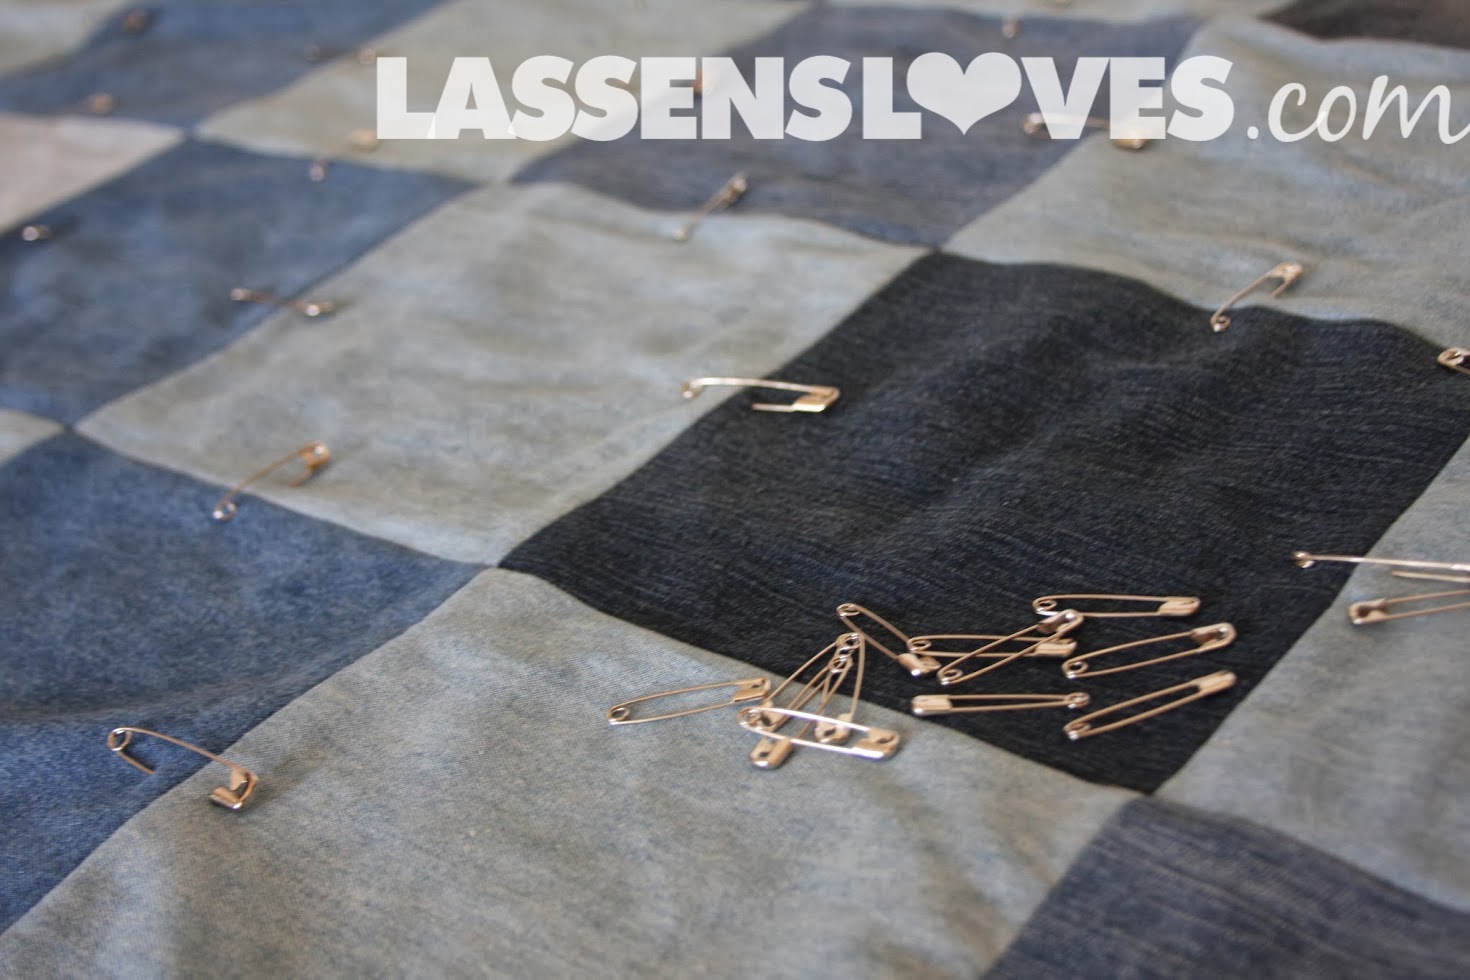 lassensloves.com, Lassen's, Lassens, jeans+blanket, denim+blanket, up+cycle